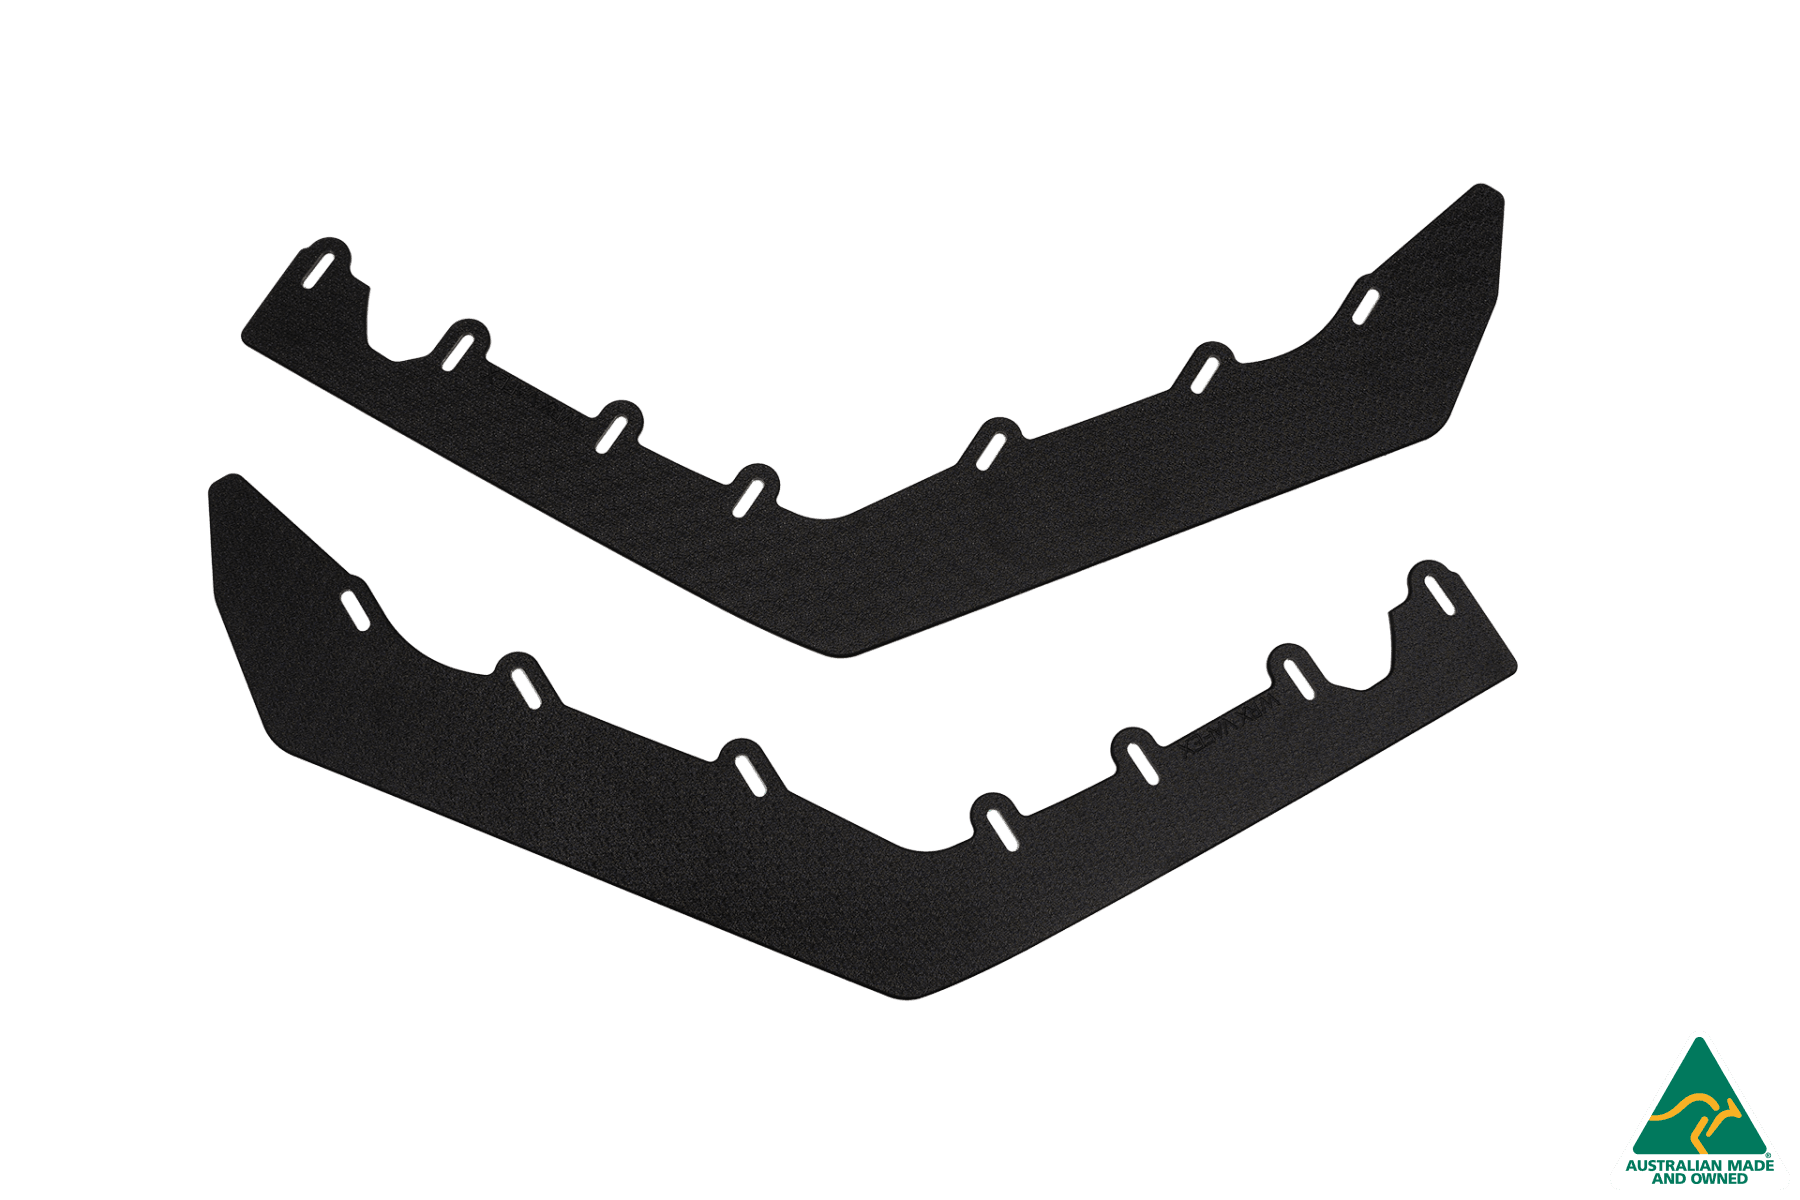 VA WRX & STI Front Lip Splitter Extensions (Pair) - MODE Auto Concepts